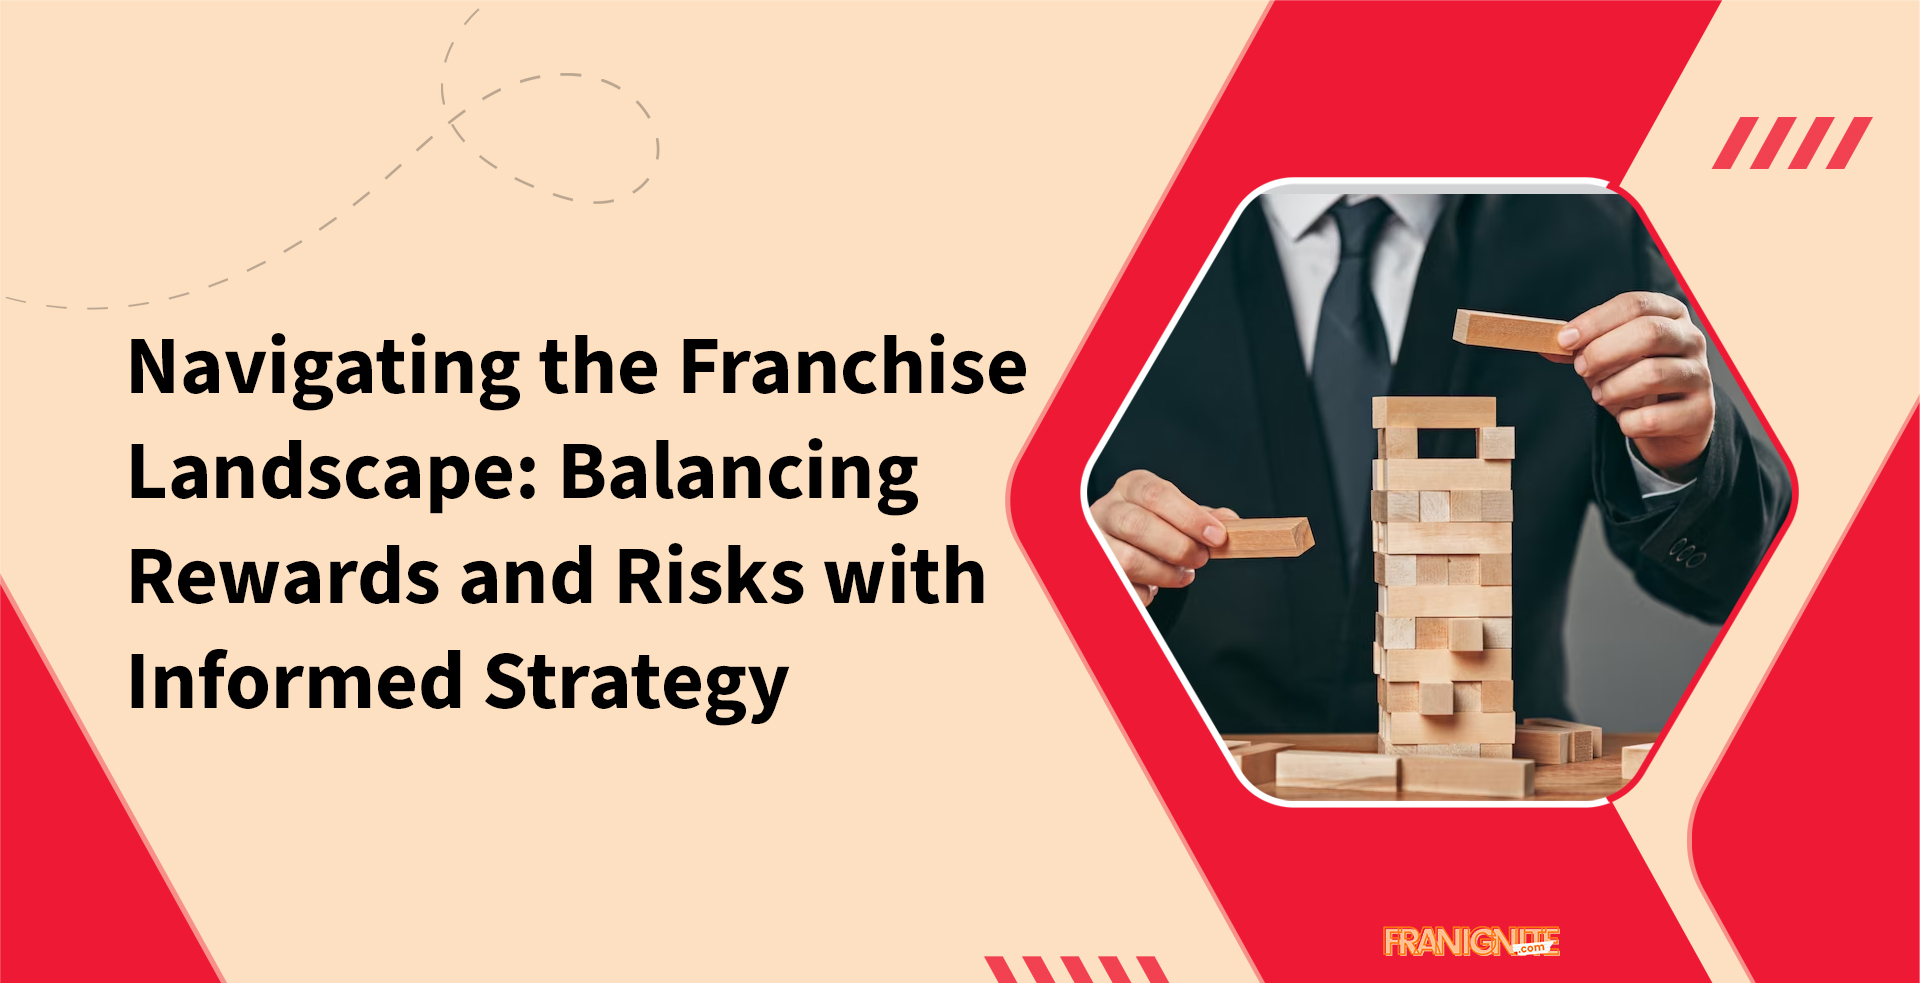 Navigating the Franchise Landscape: Balancing Rewards and Risks with Informed Strategy